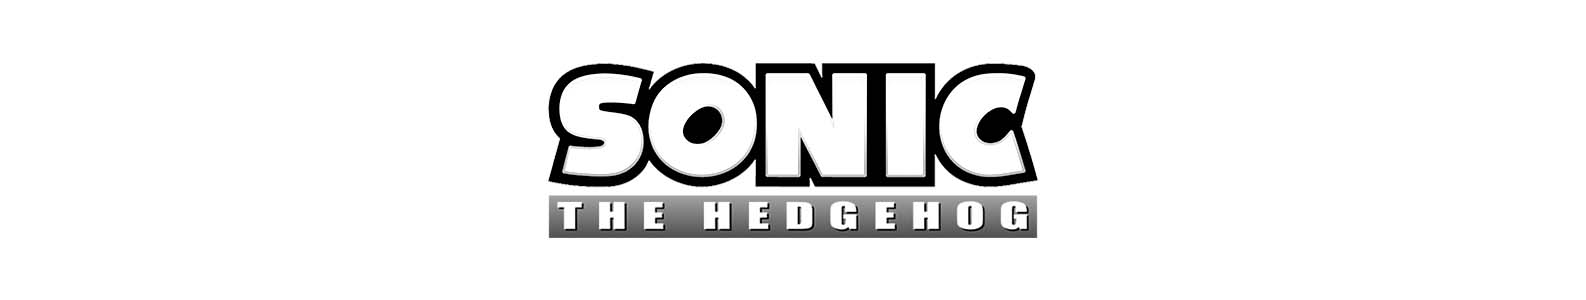 Sonic the Hedgehog brand header image